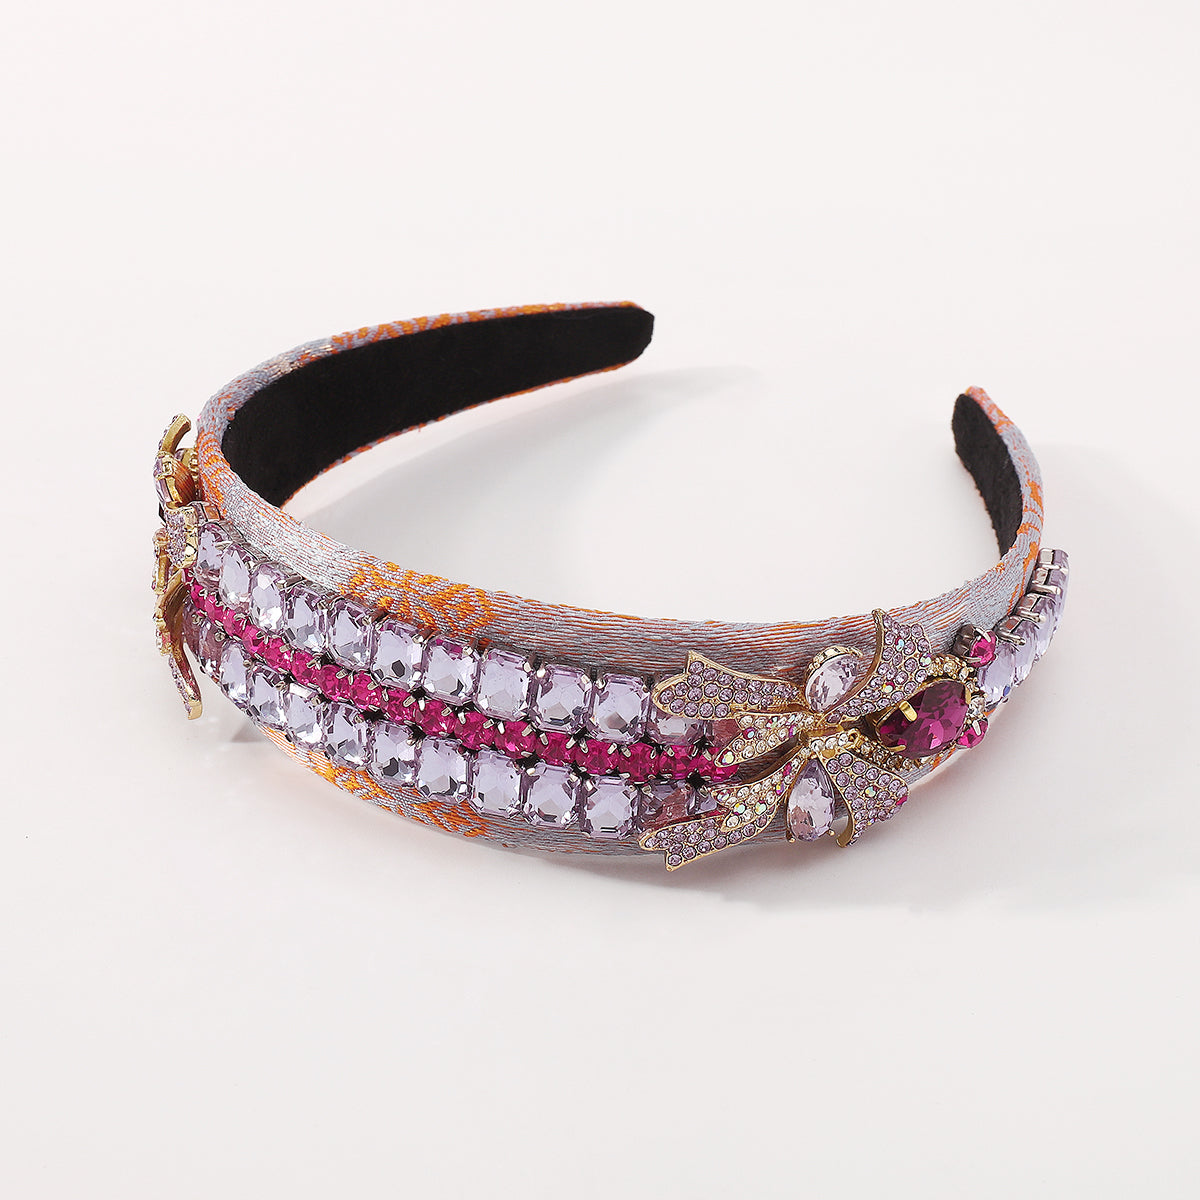 Luxury Baroque Rhinestone Side Bowknot Headband medyjewelry